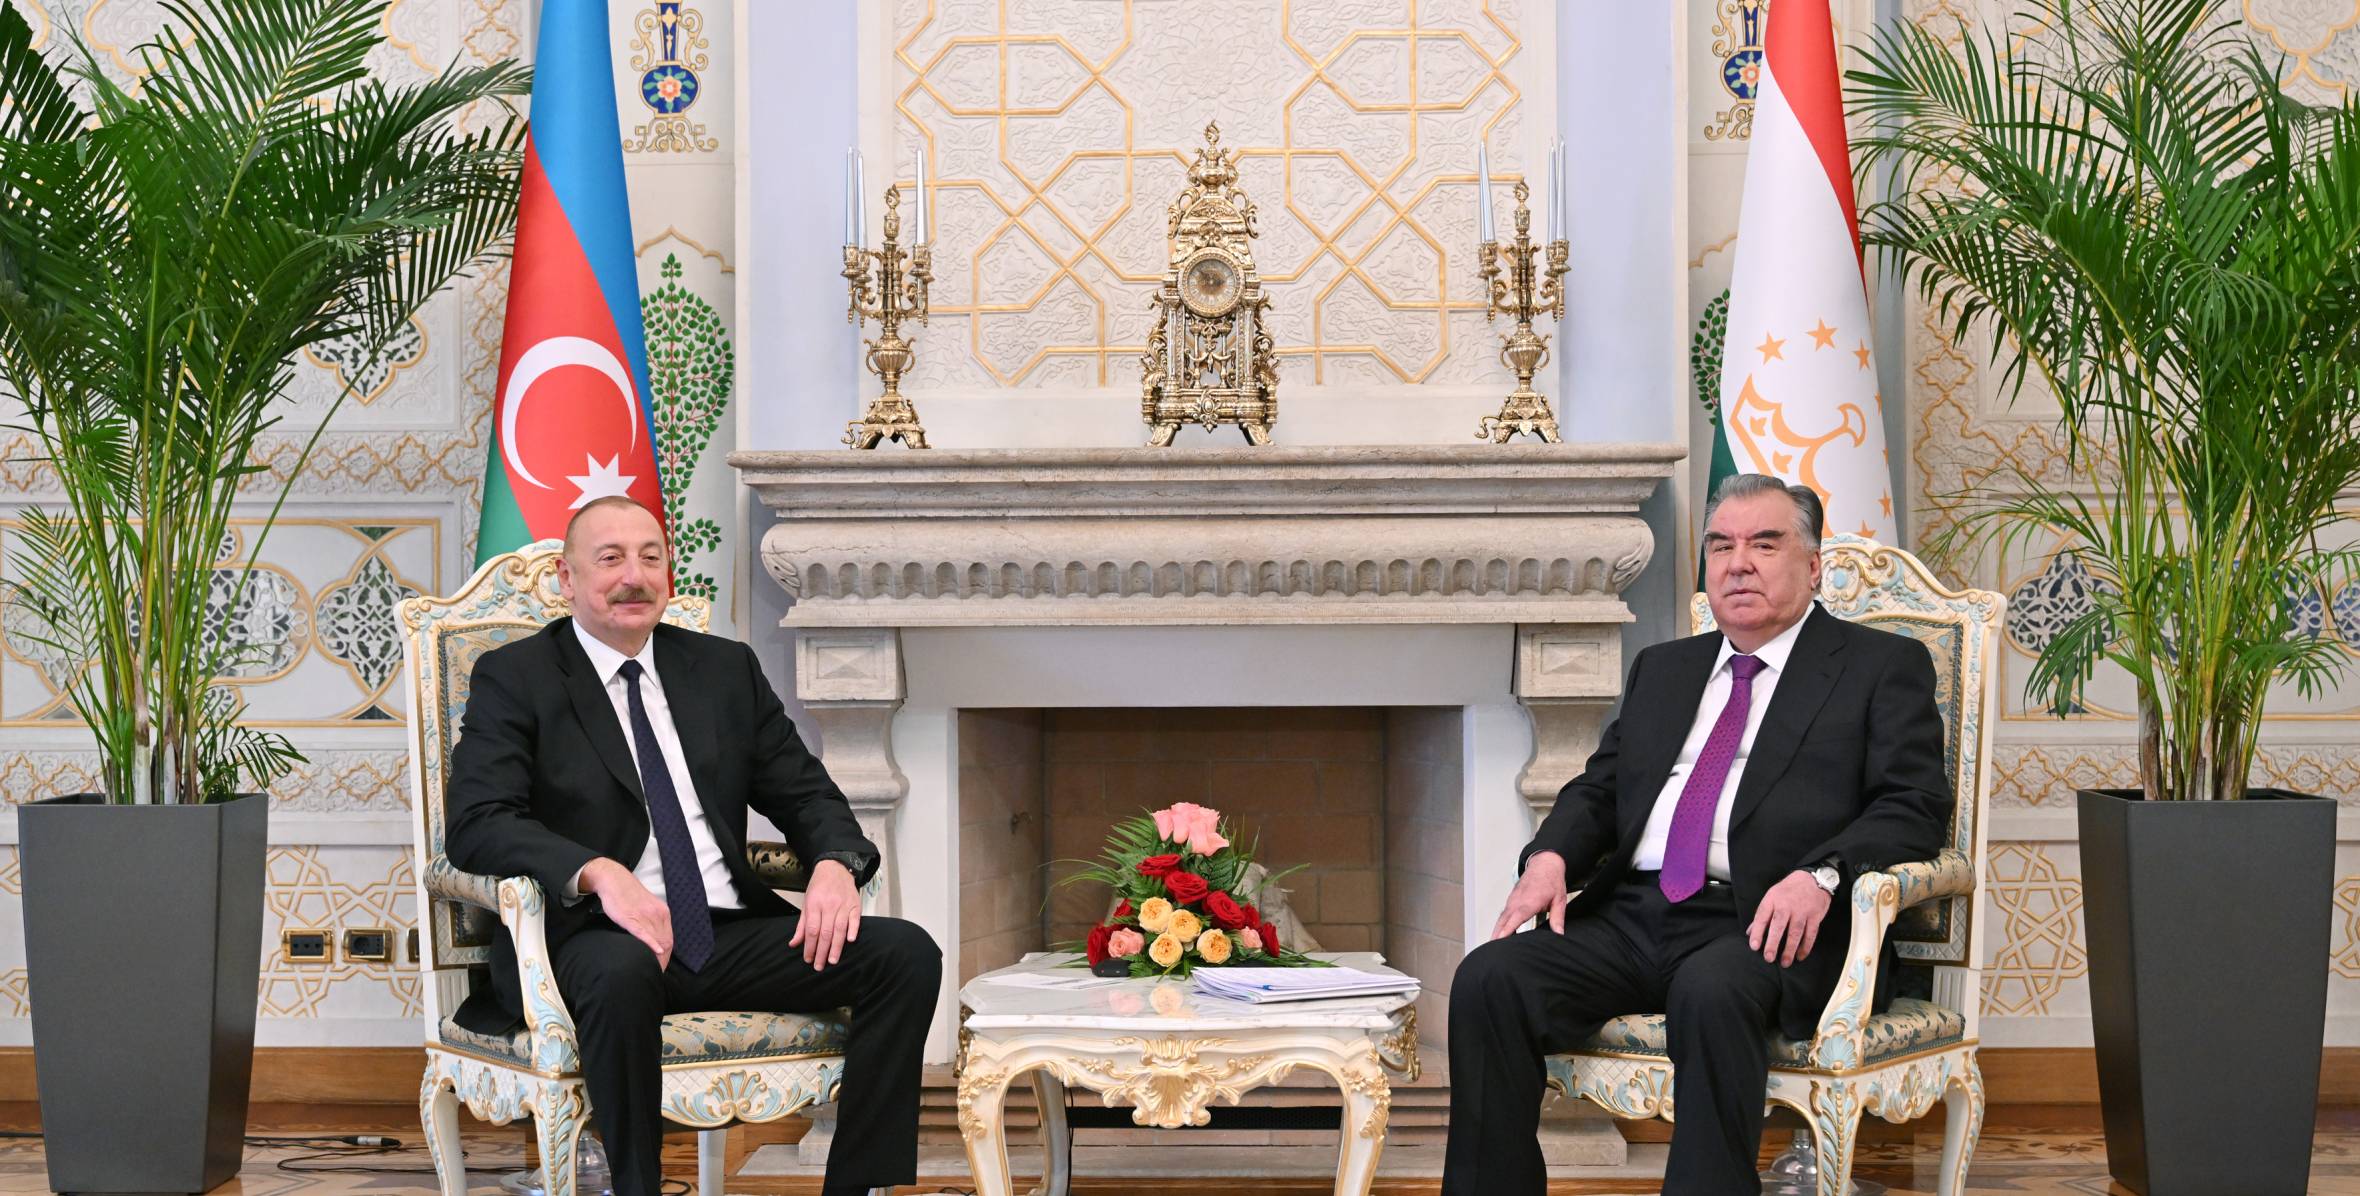 Ilham Aliyev held one-on-one meeting with President of Tajikistan Emomali Rahmon